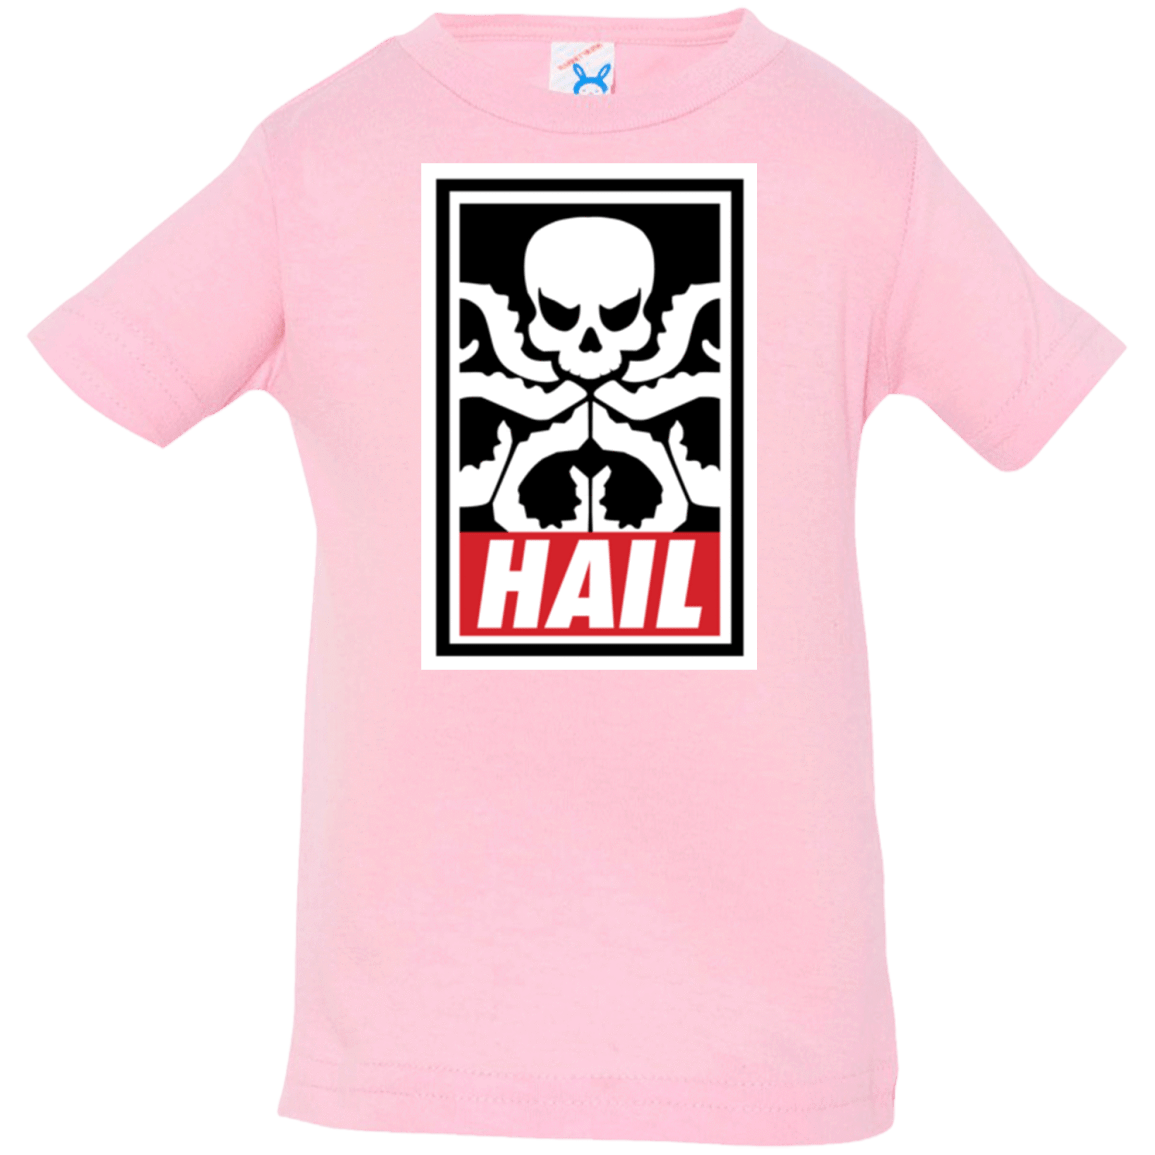 T-Shirts Pink / 6 Months Hail Hydra Infant PremiumT-Shirt